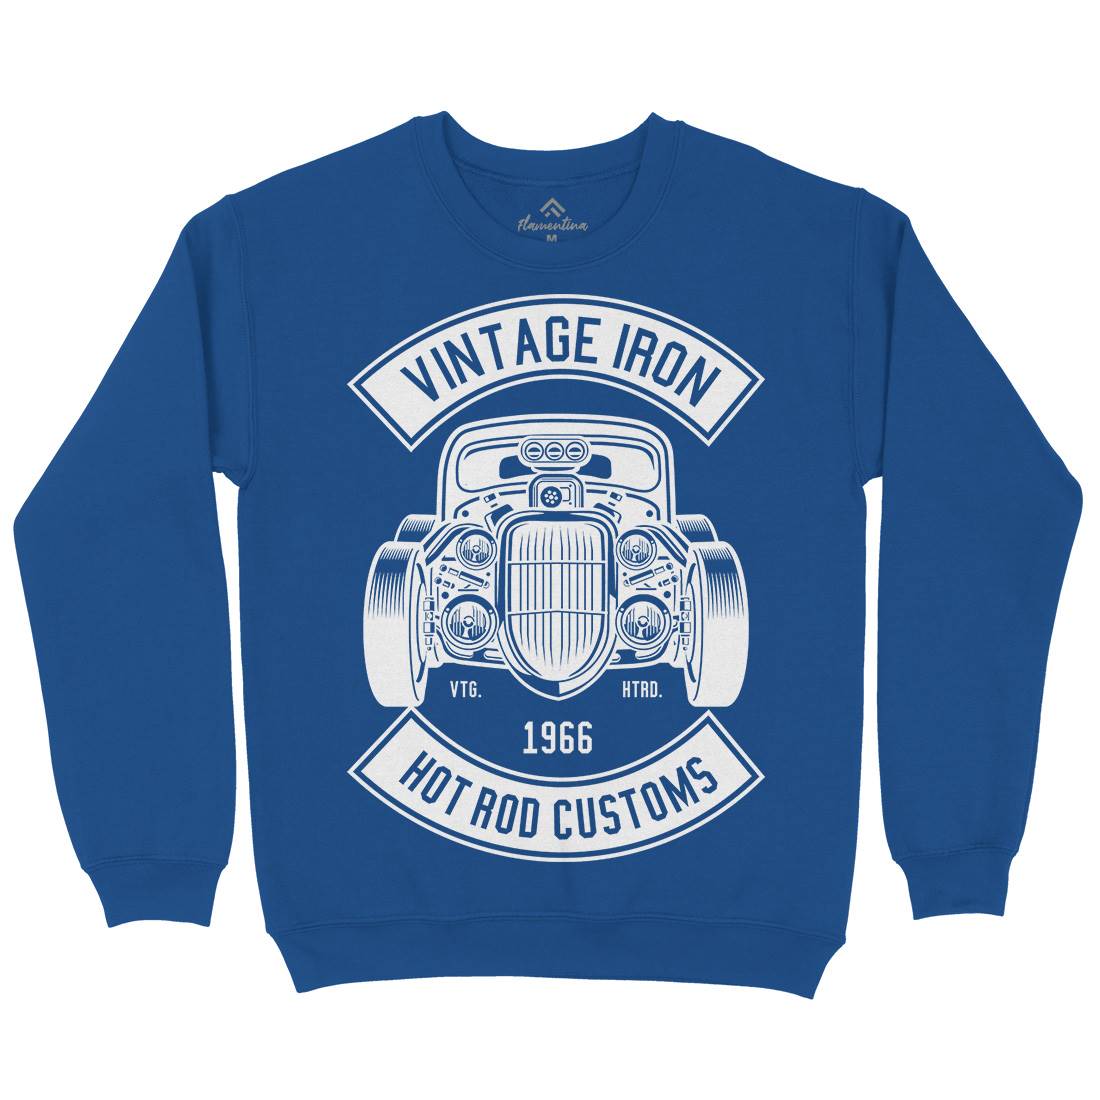 Vintage Iron Kids Crew Neck Sweatshirt Cars B666